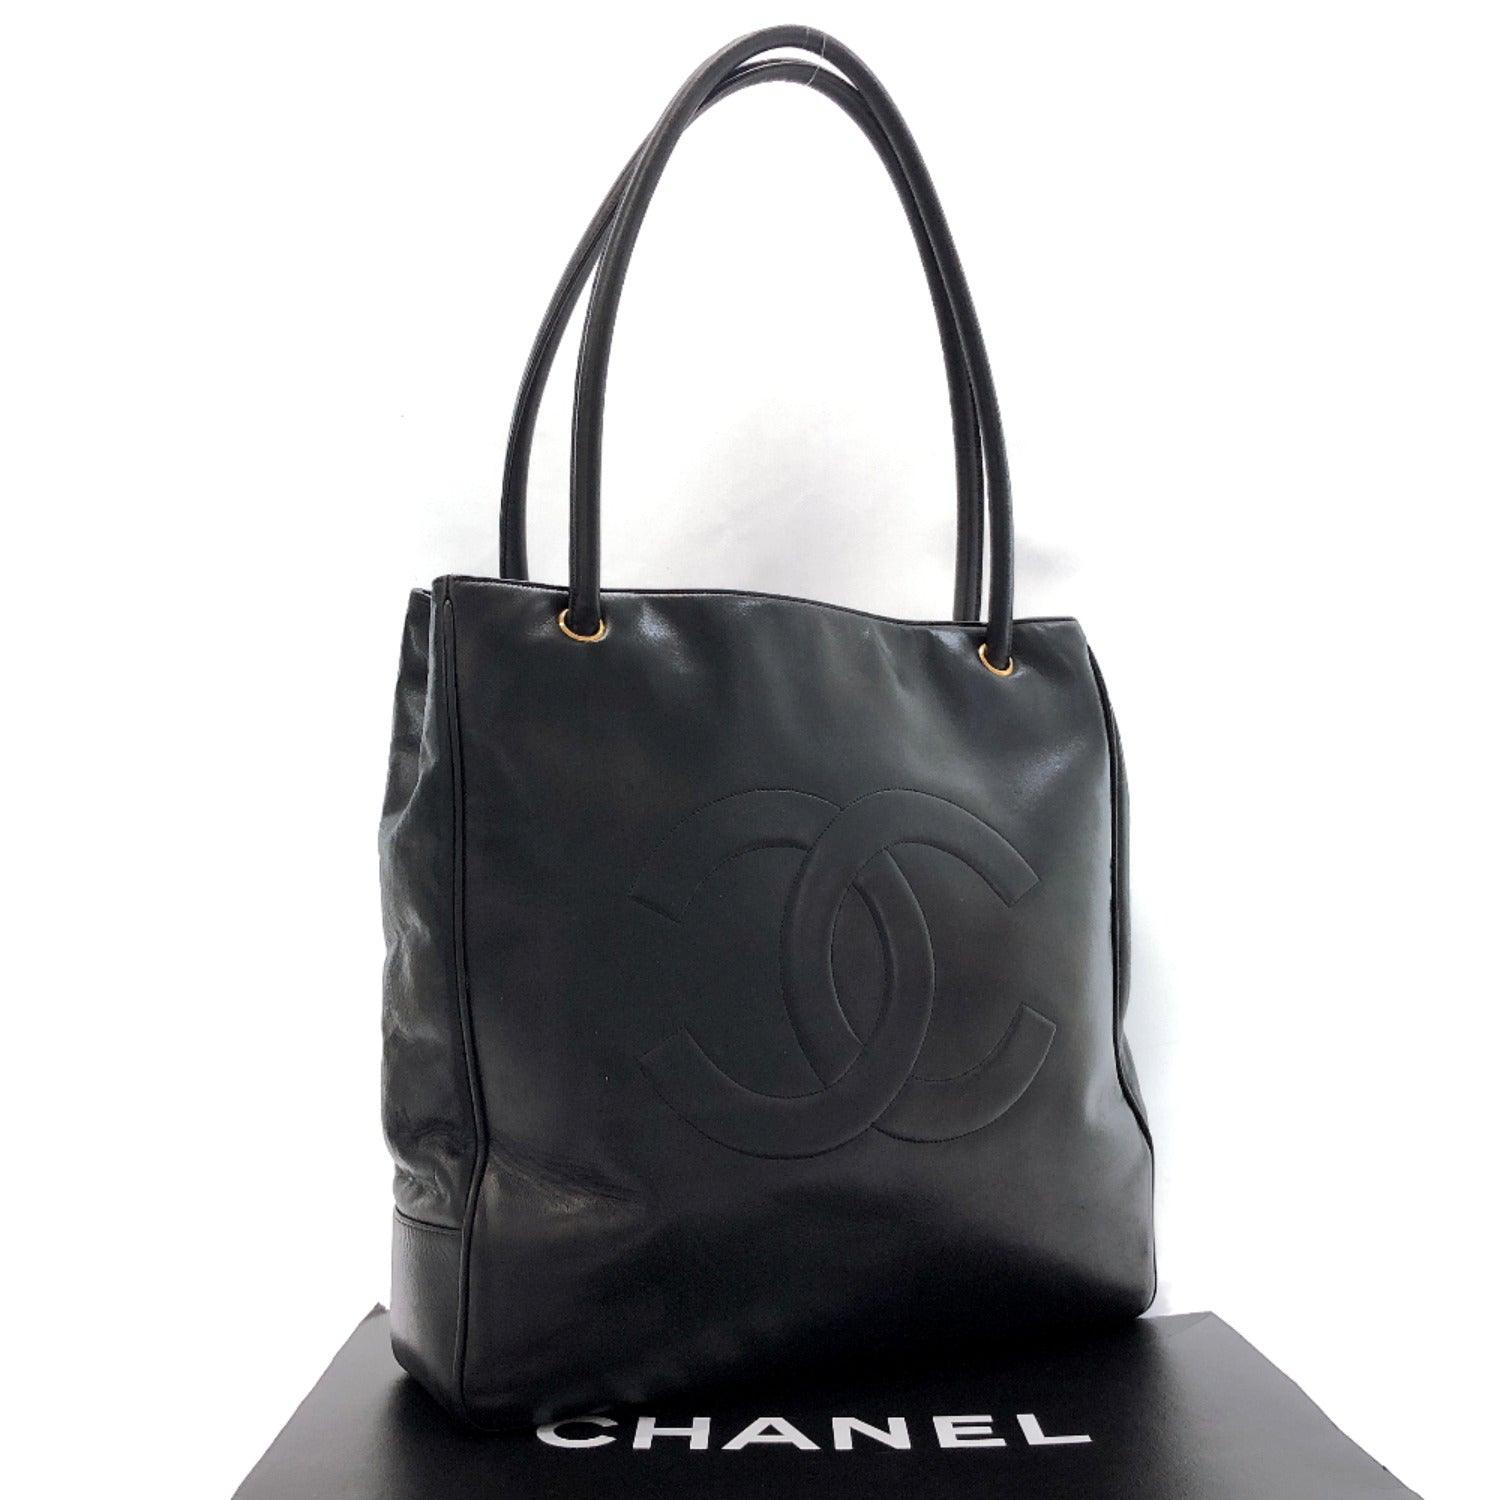 Chanel Pre - Owned 2010 CC diamond - Le lion de chanel - quilted Tote Bag -  ArvindShops